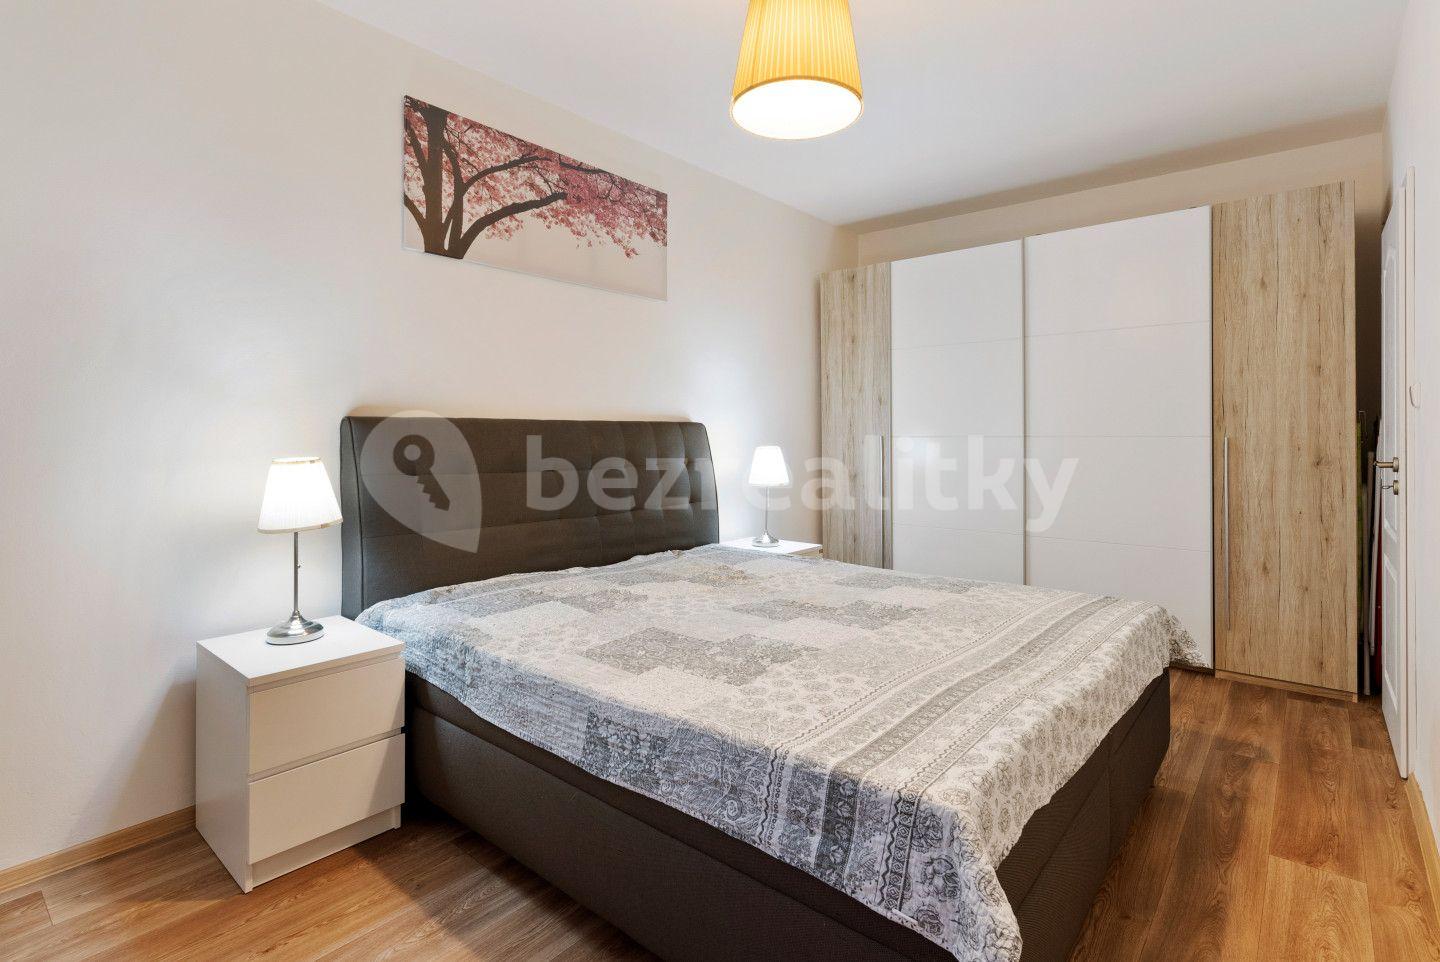 1 bedroom with open-plan kitchen flat for sale, 42 m², Horská, Tanvald, Liberecký Region